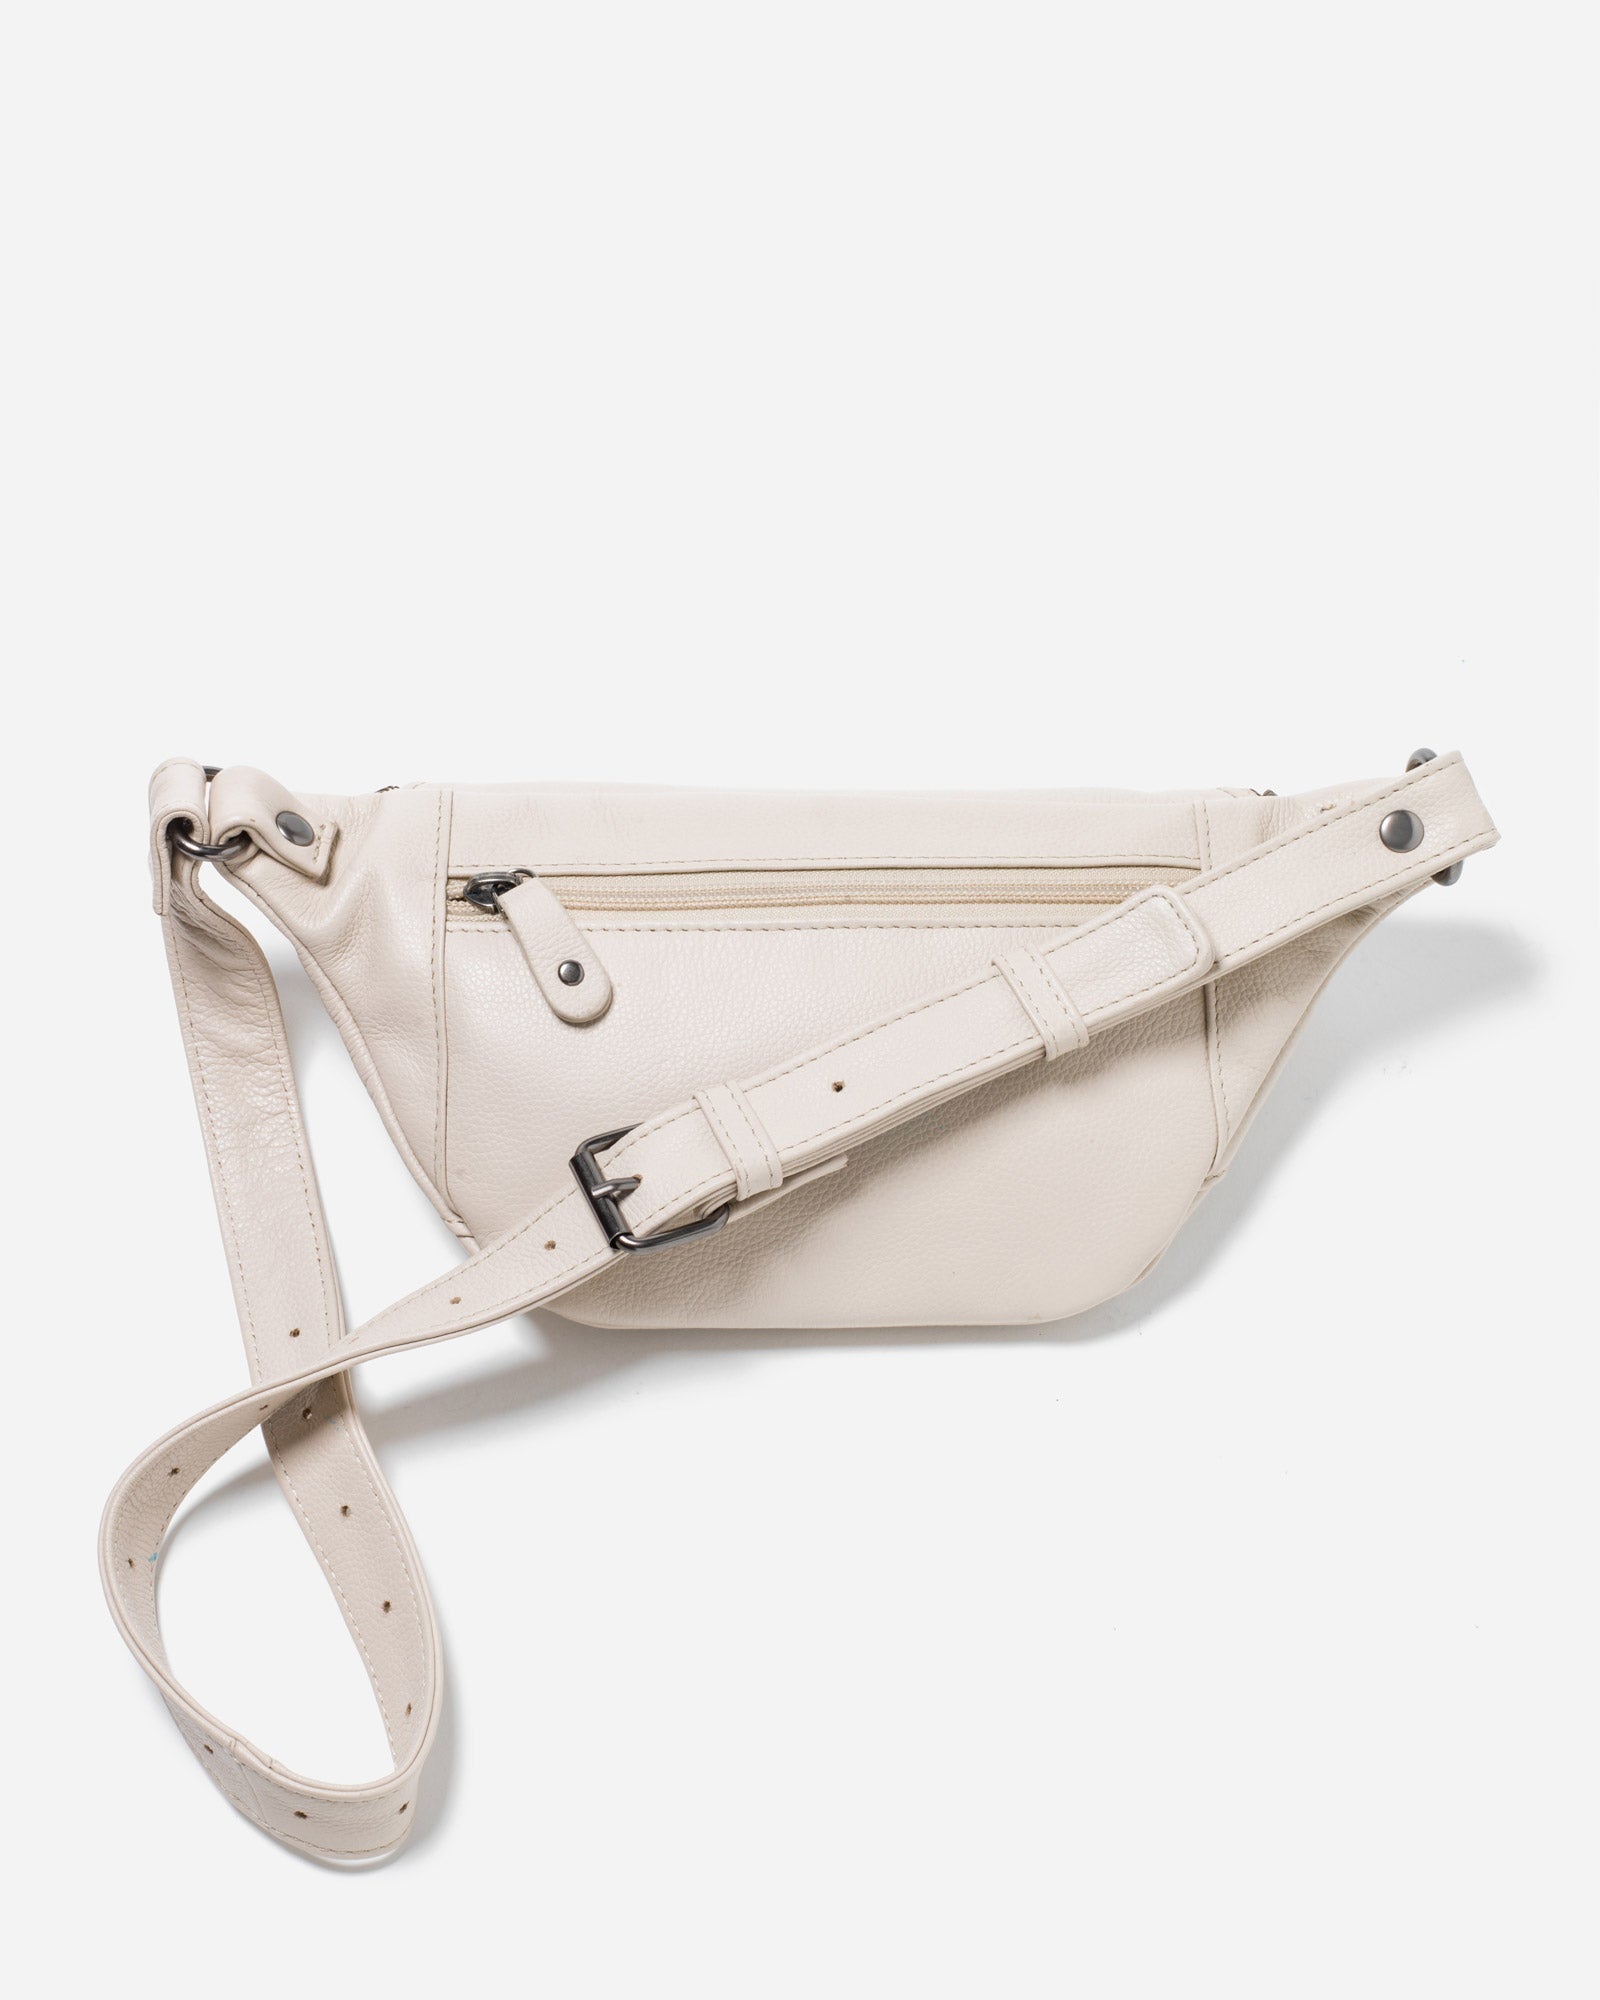 STS Ranchwear Bandana Bailey Bag: Handbags: Amazon.com